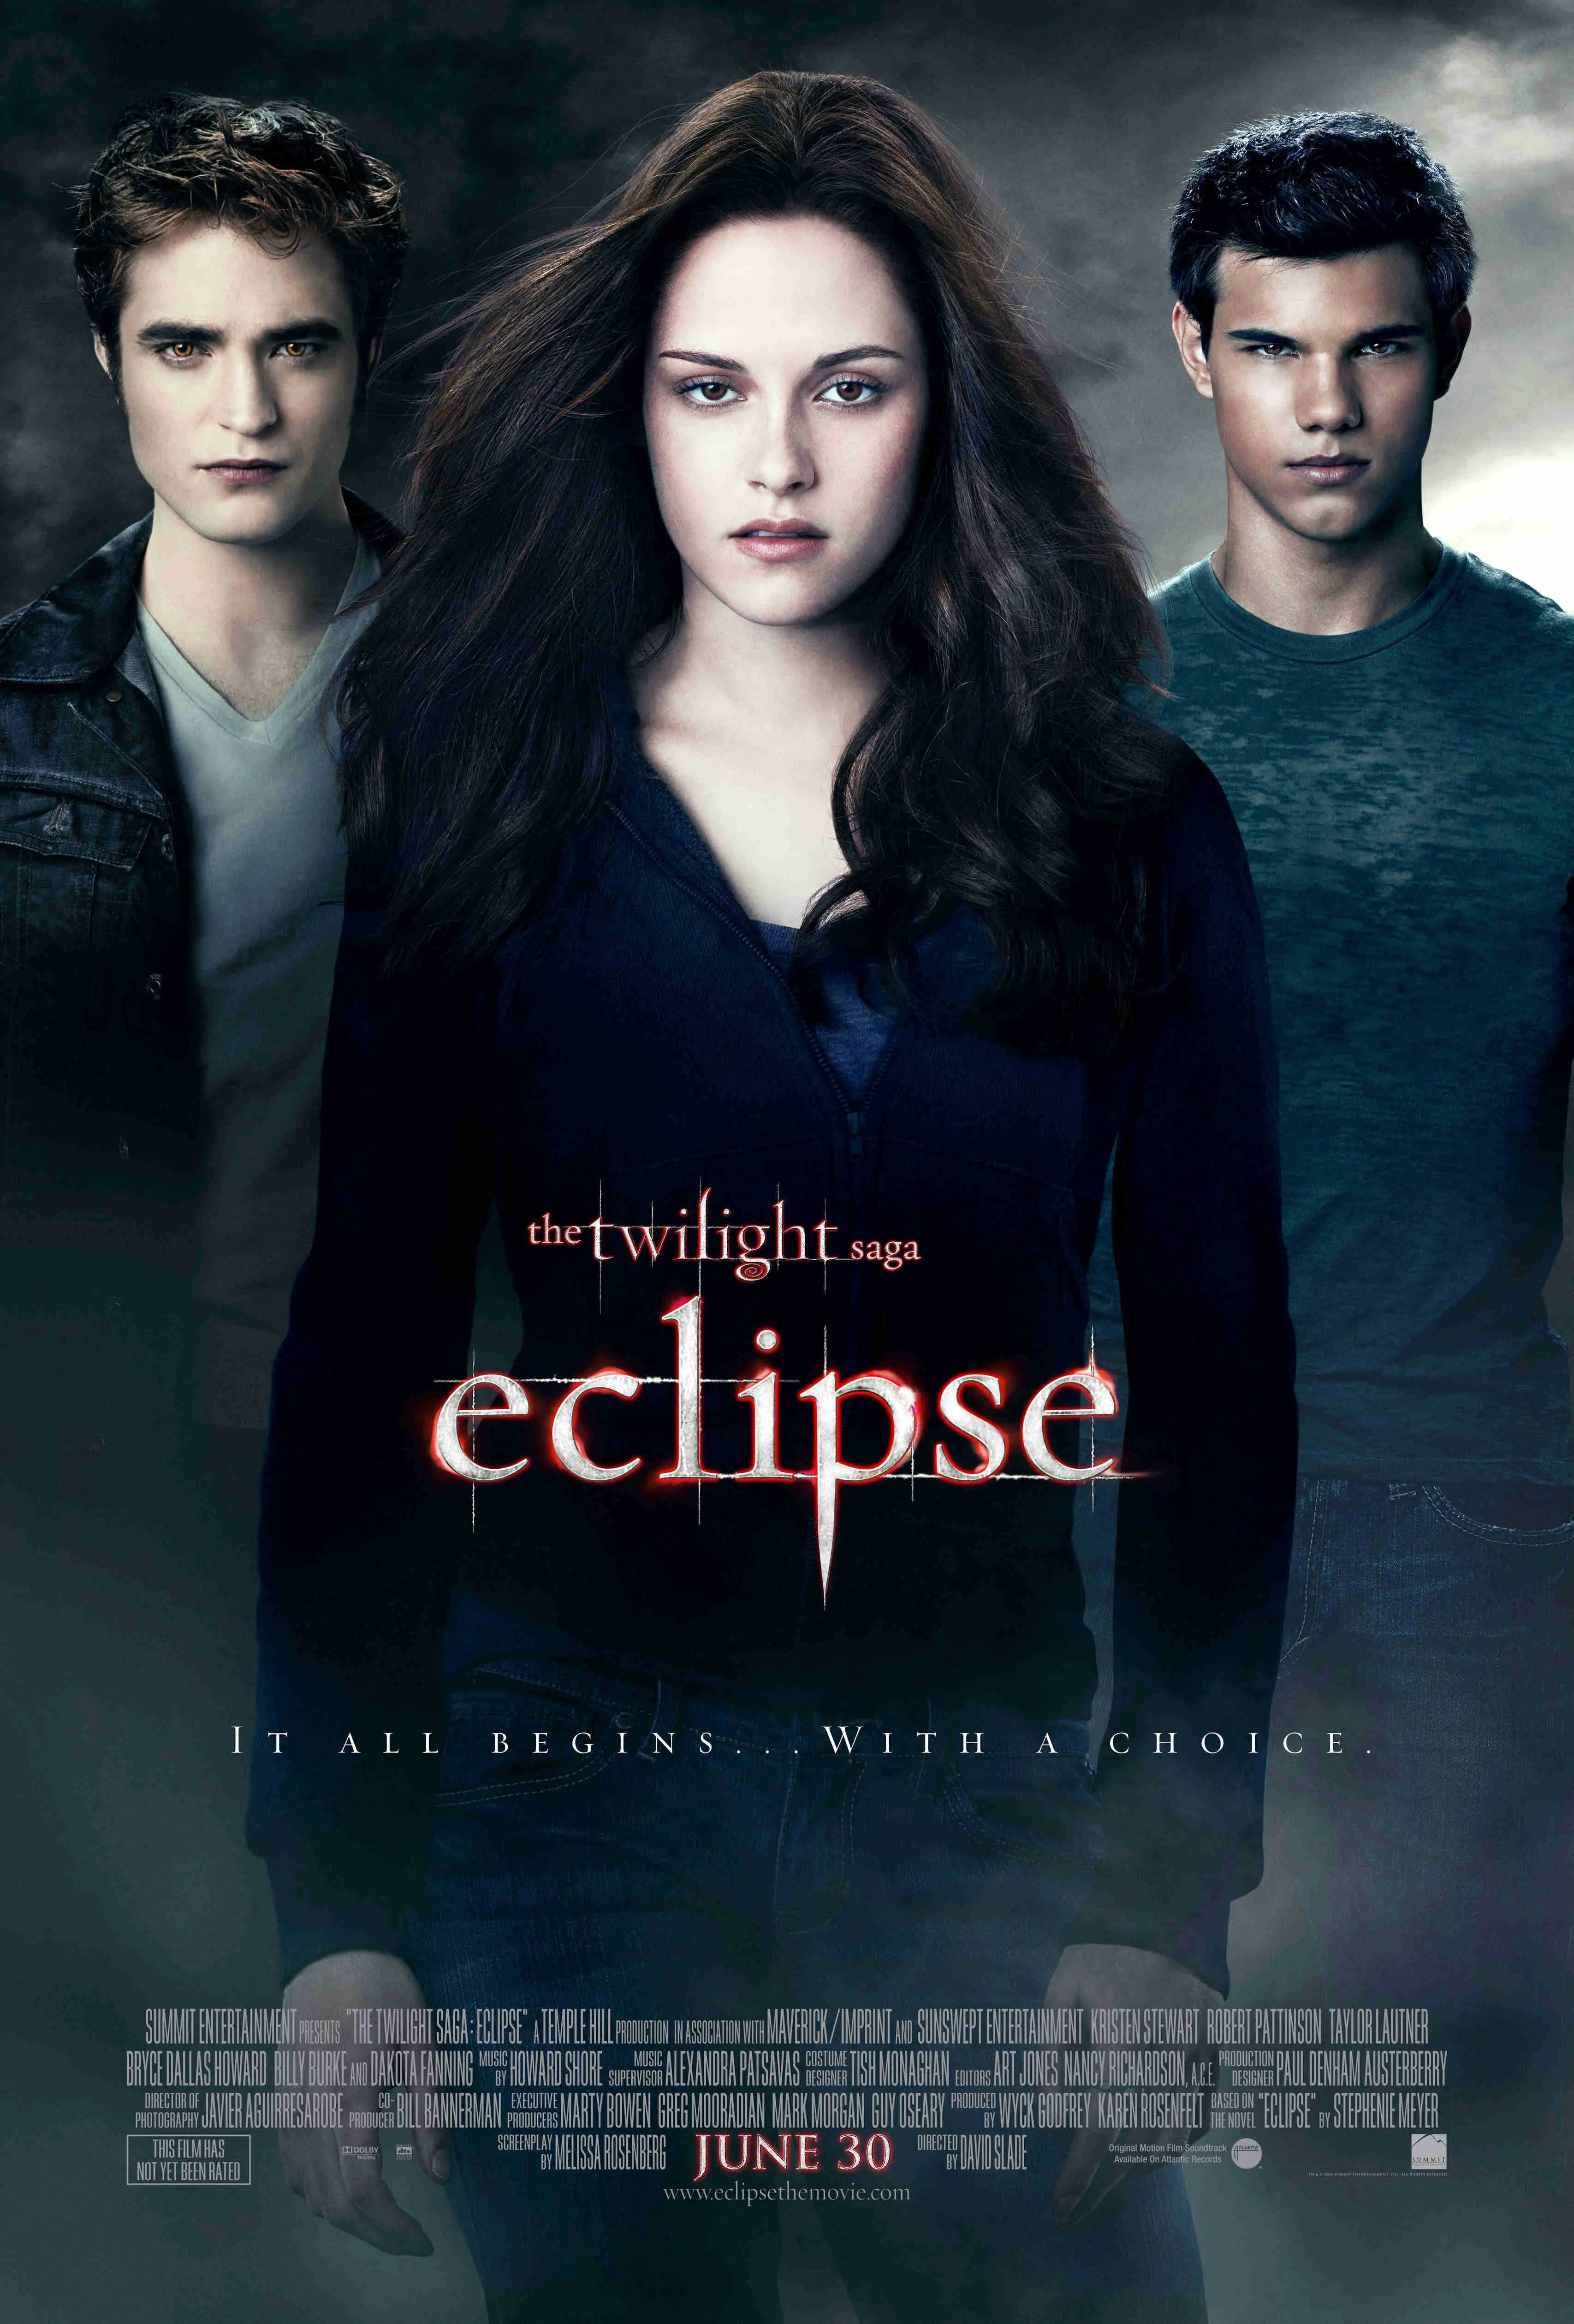 The Twilight Saga Eclipse 2010 Poster The Twilight Saga Eclipse (2010)